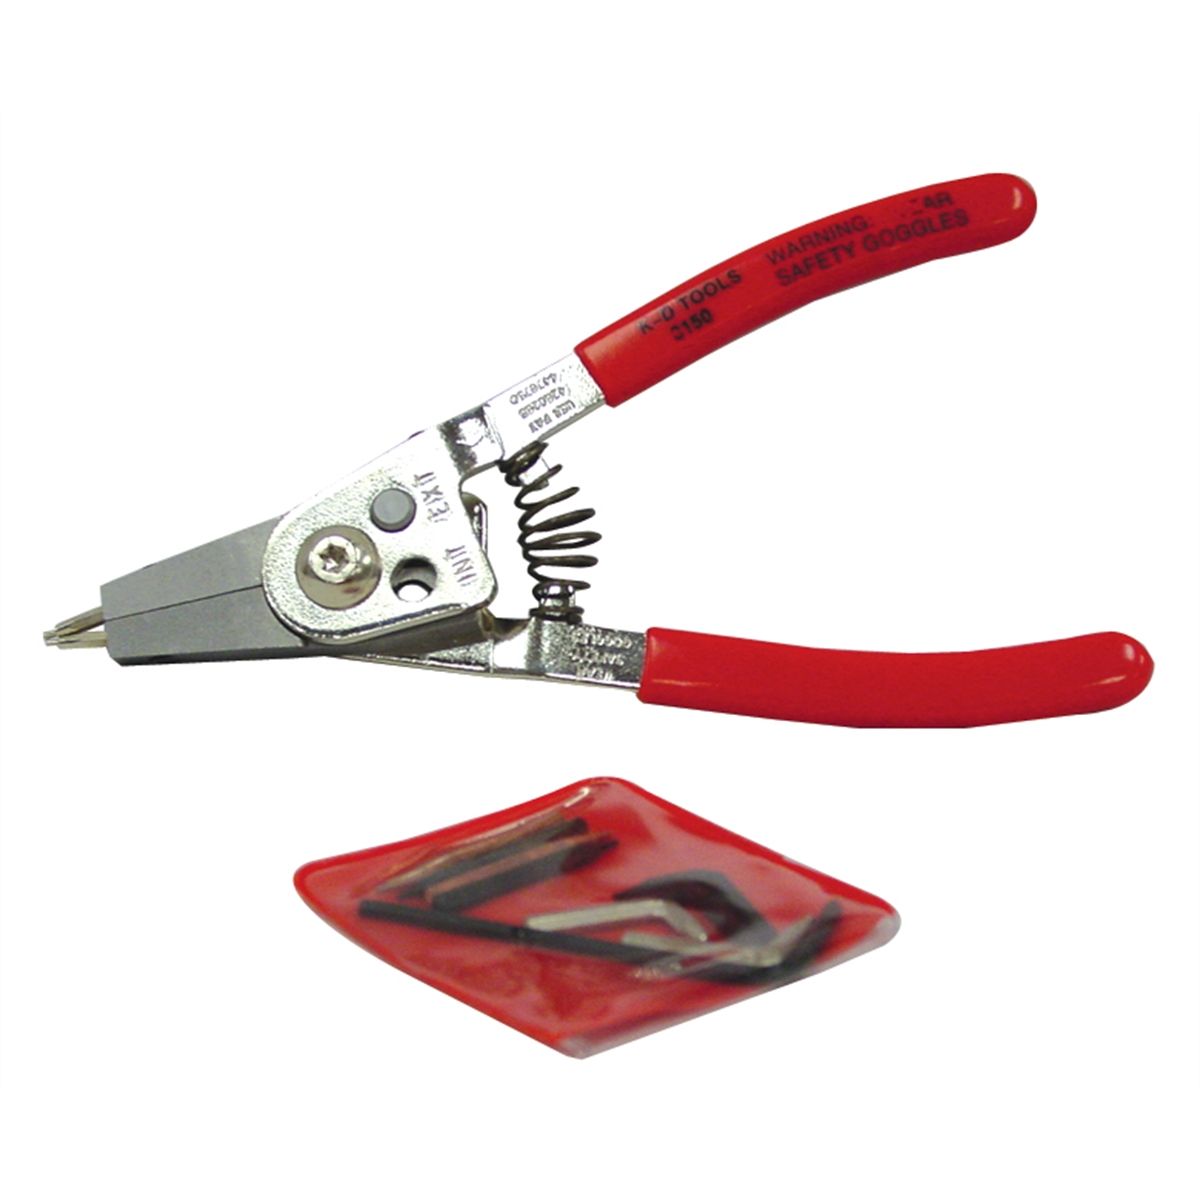 Convertible Internal & External Snap Ring Pliers - Small